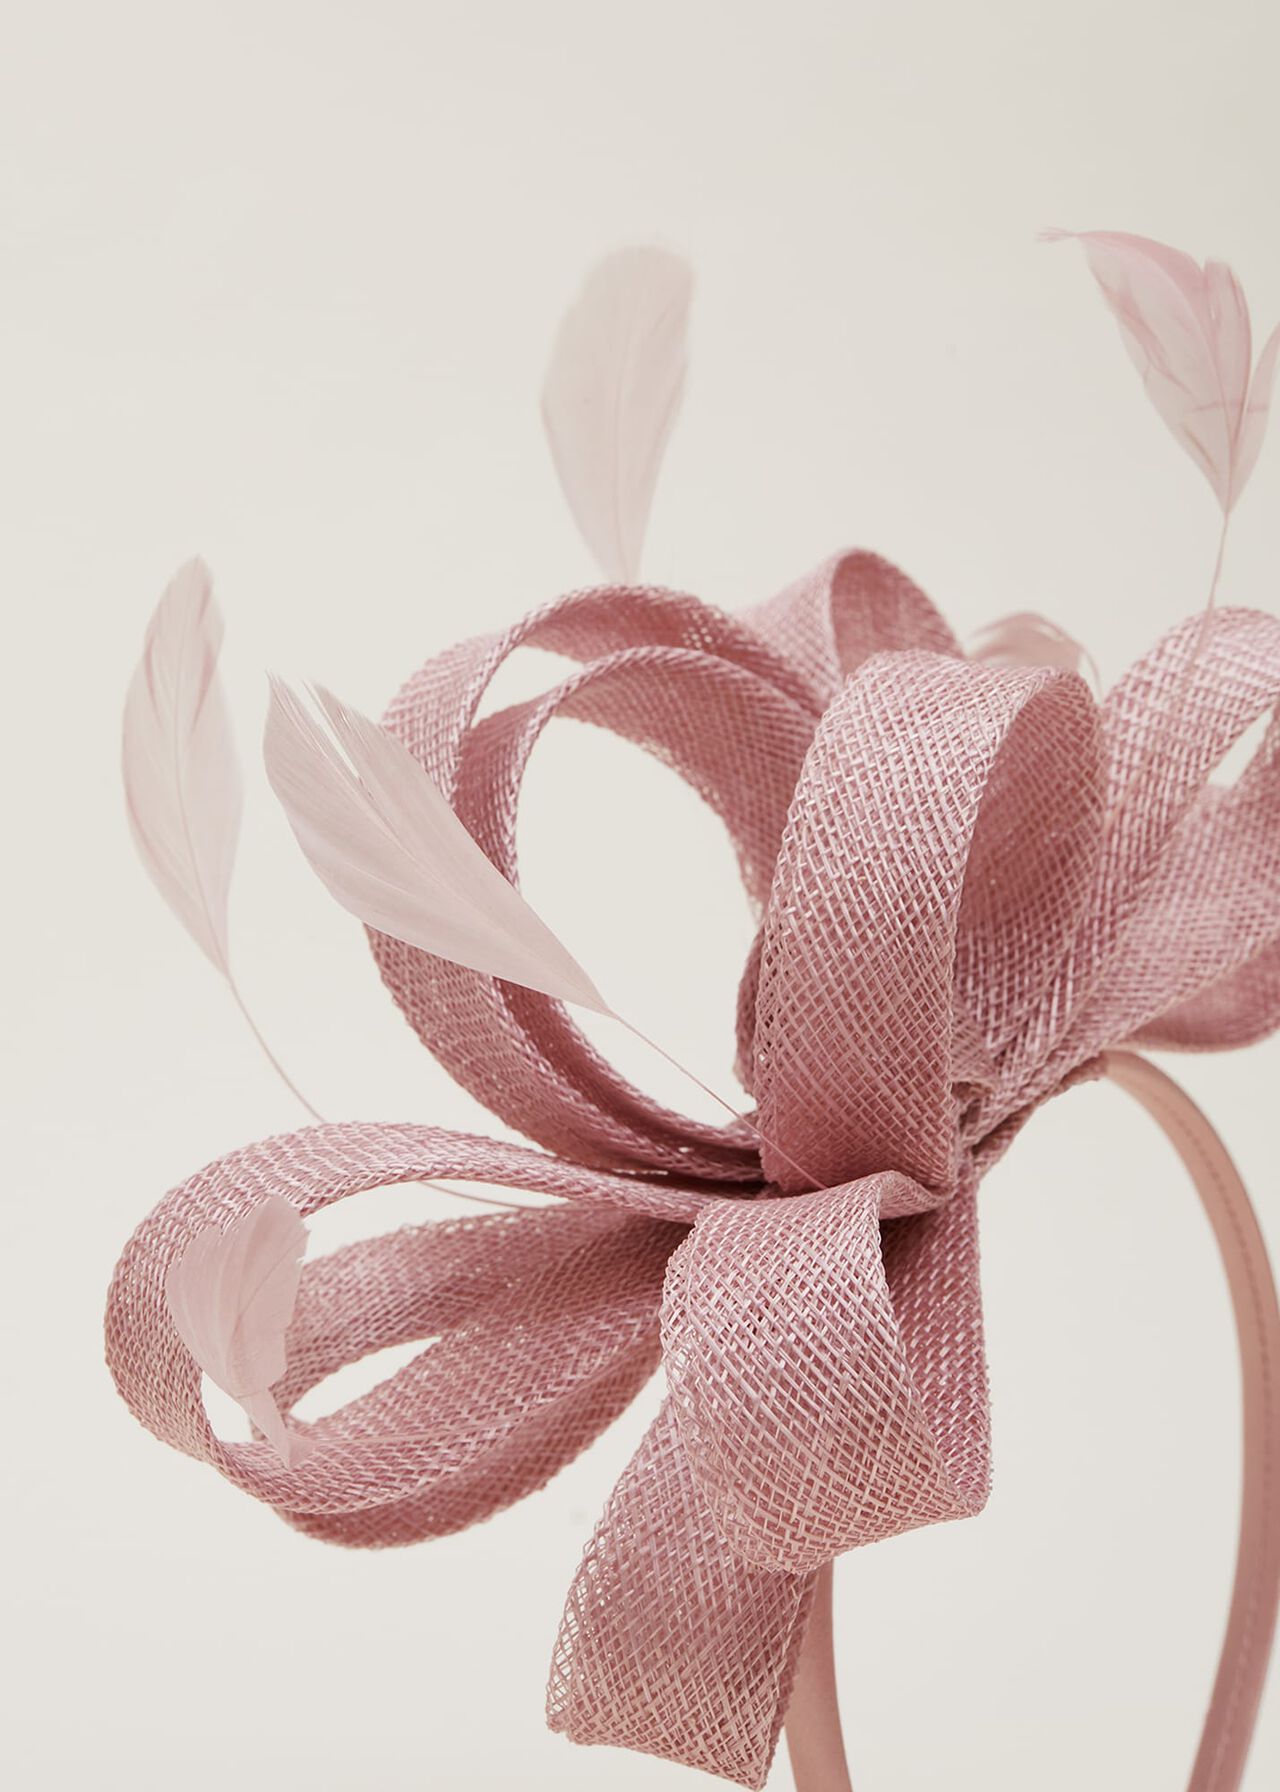 Blush Pink Bow Headband